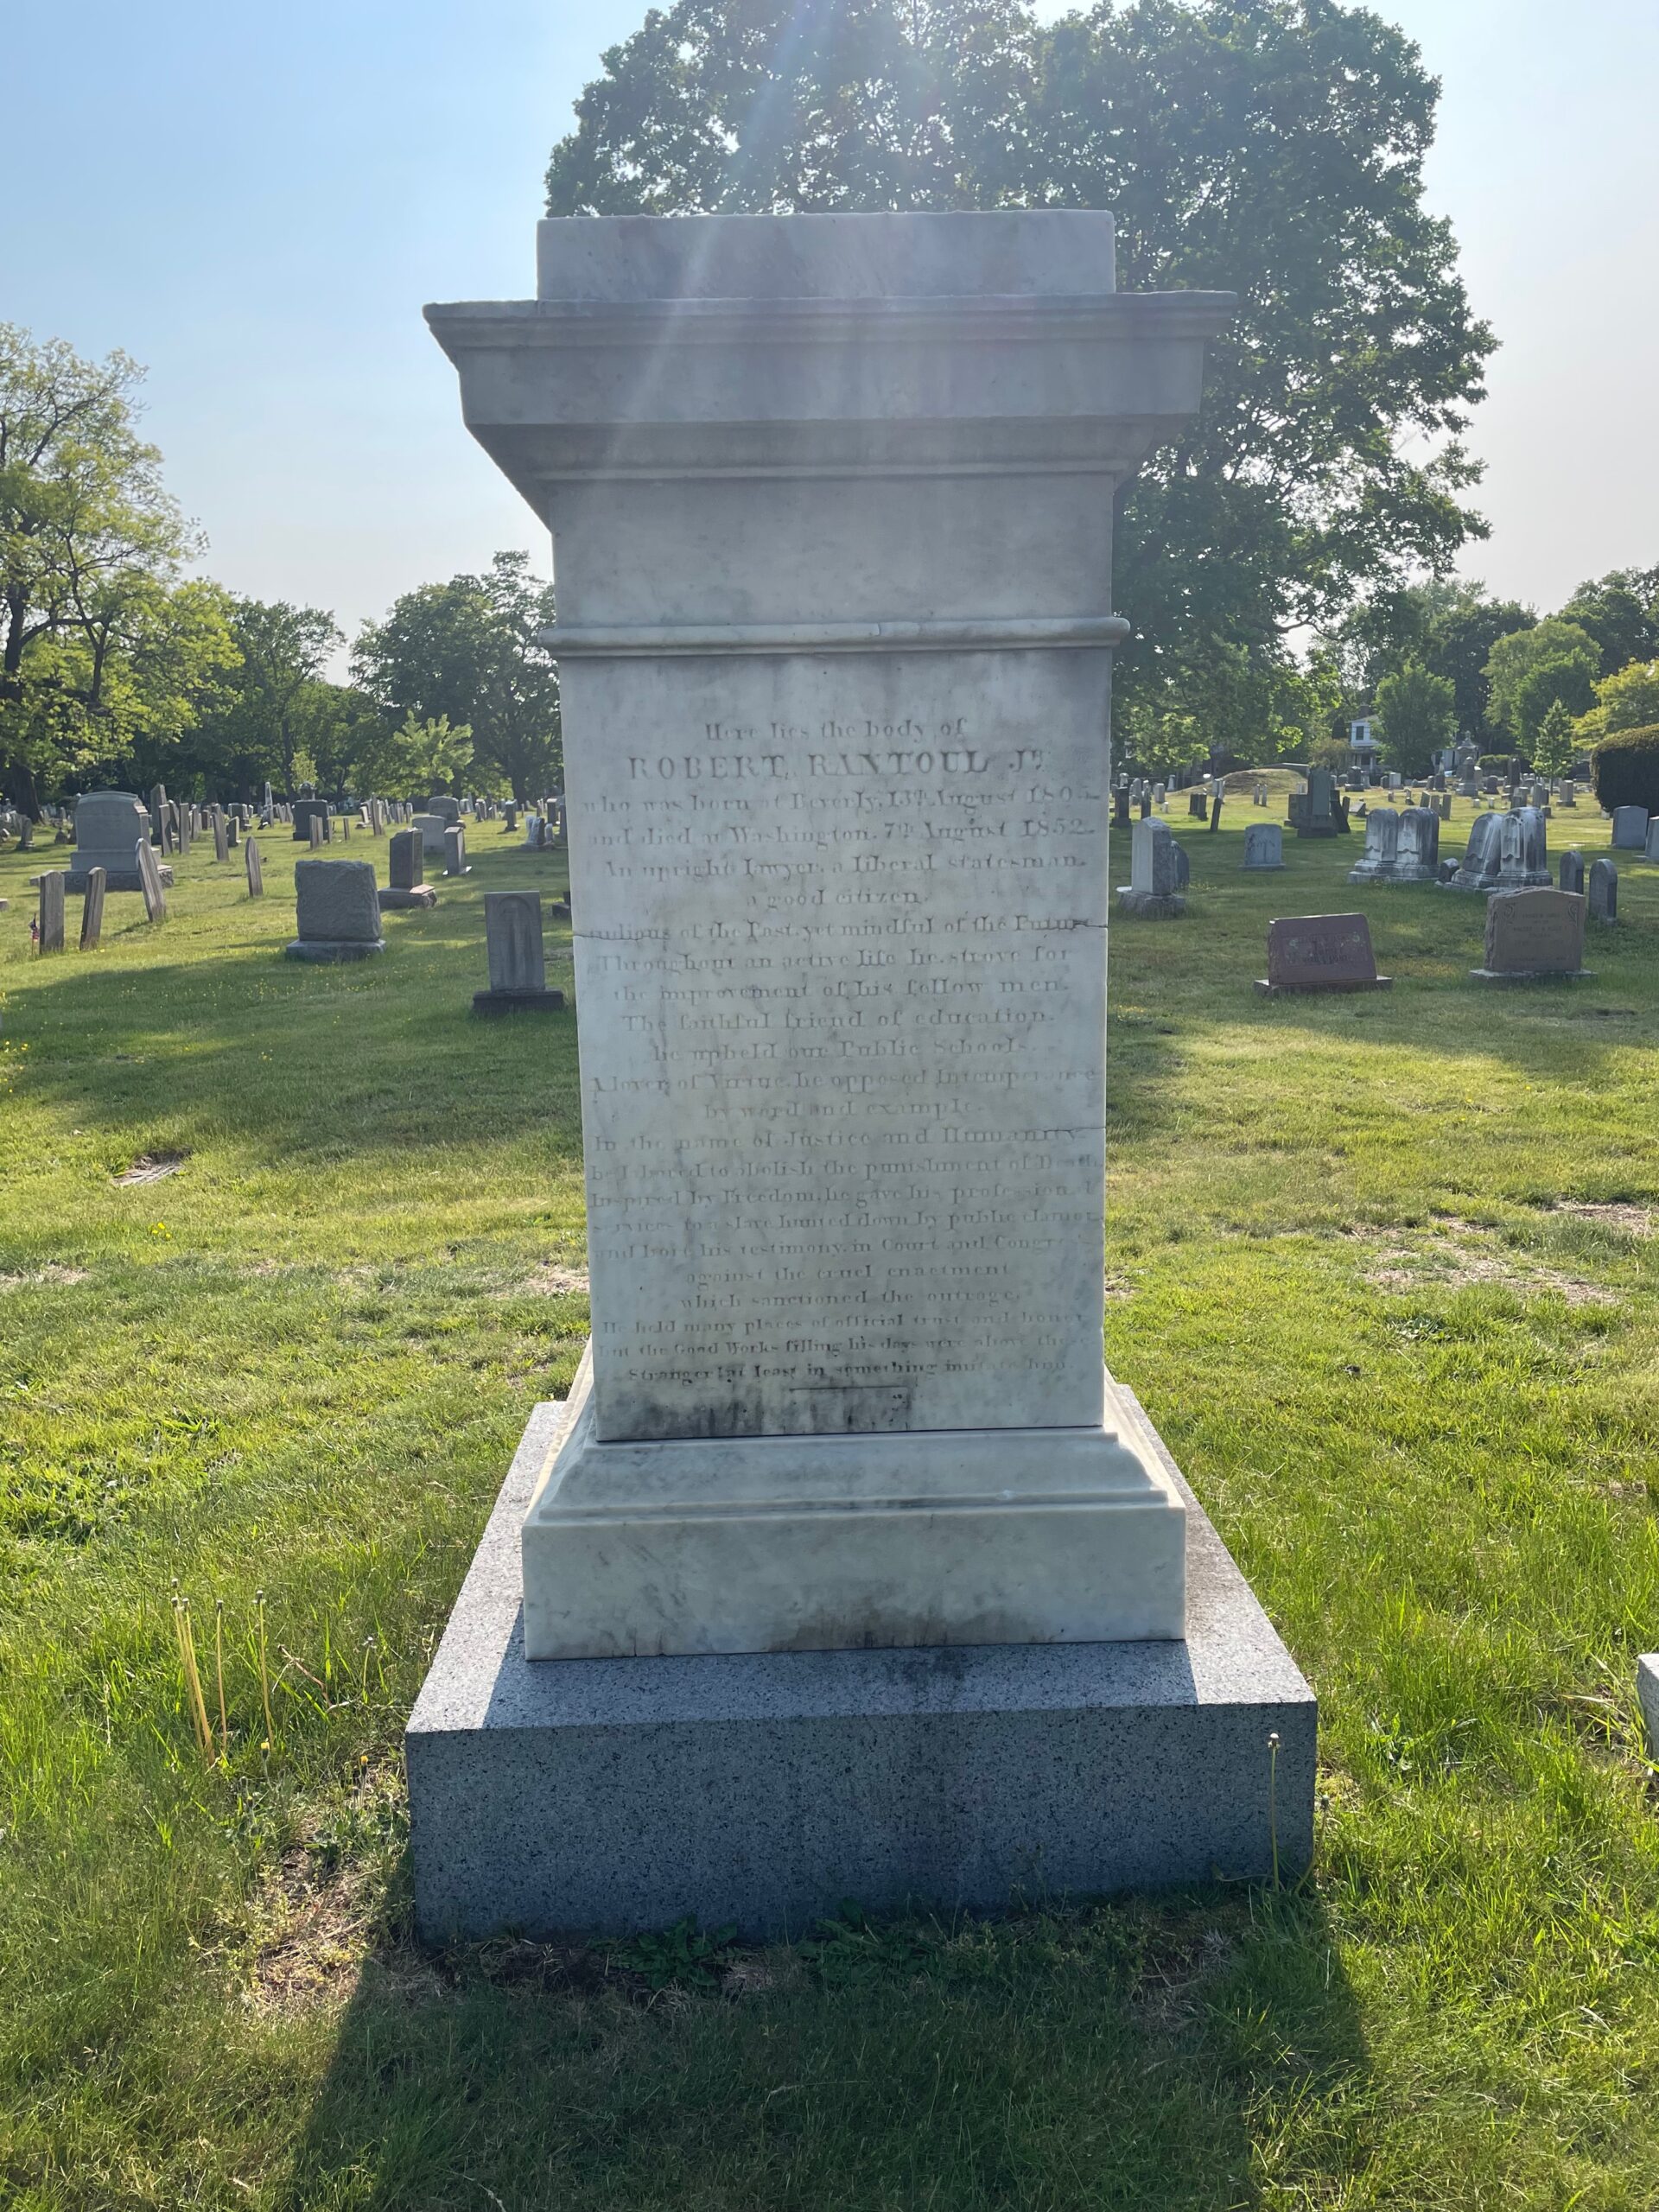 Sumner Street Cemetery in Gloucester, Massachusetts - Find a Grave